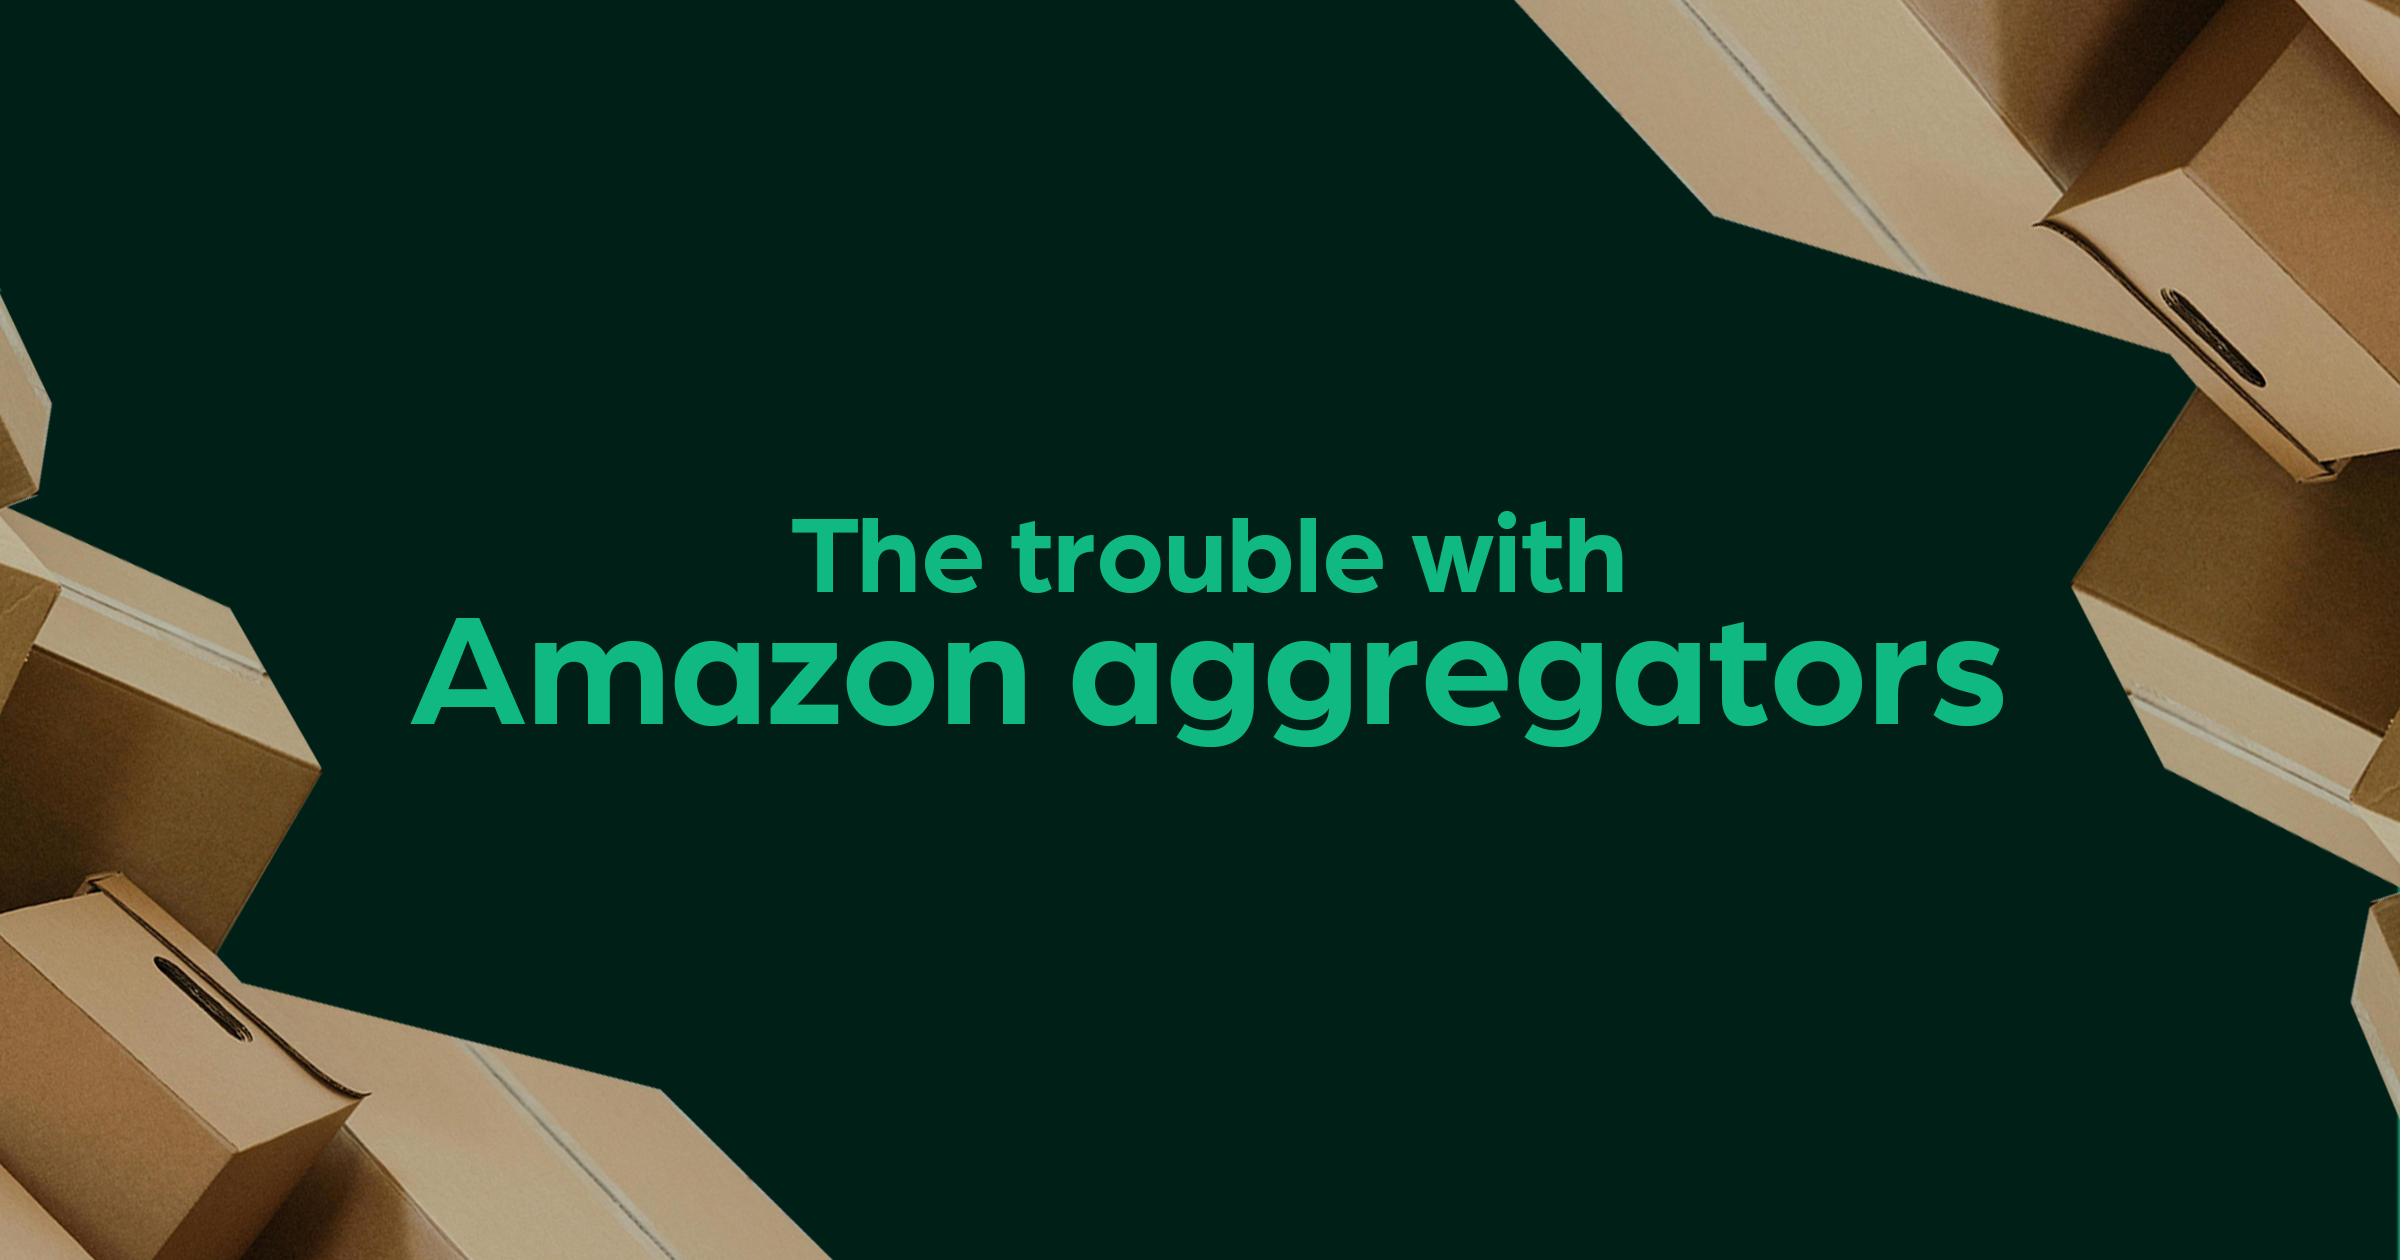 Amazonas-Aggregatoren